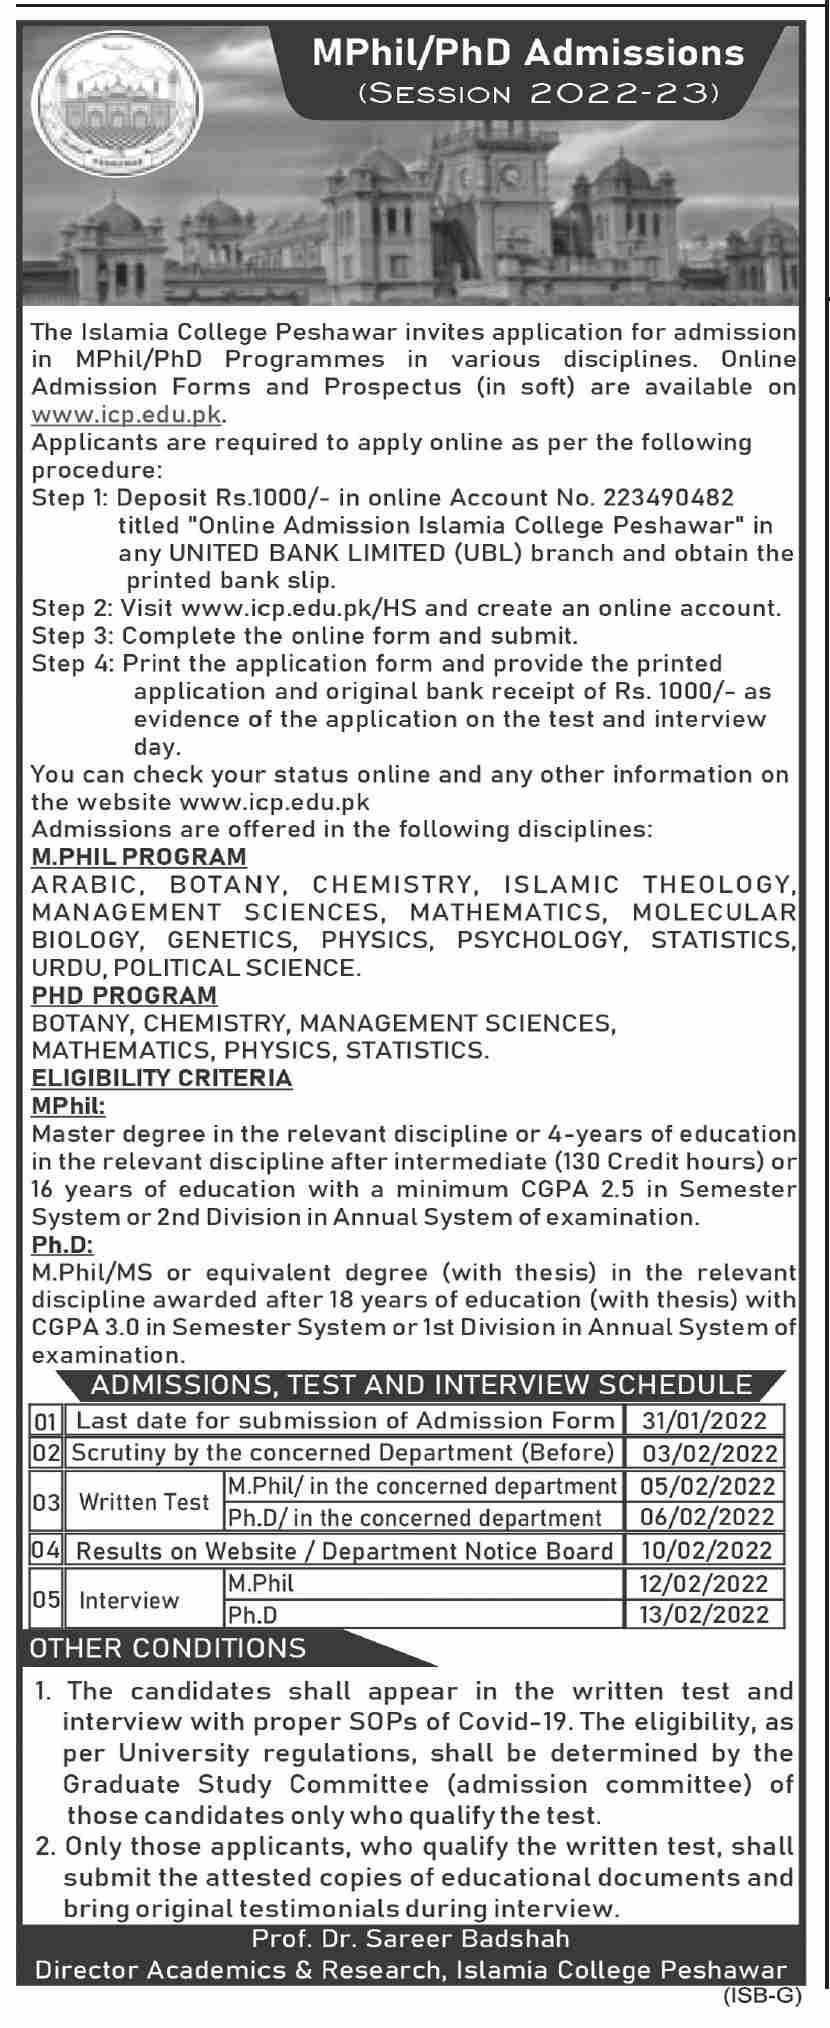 MPhil/PhD Admissions in Islamia College Peshawar 2022-23